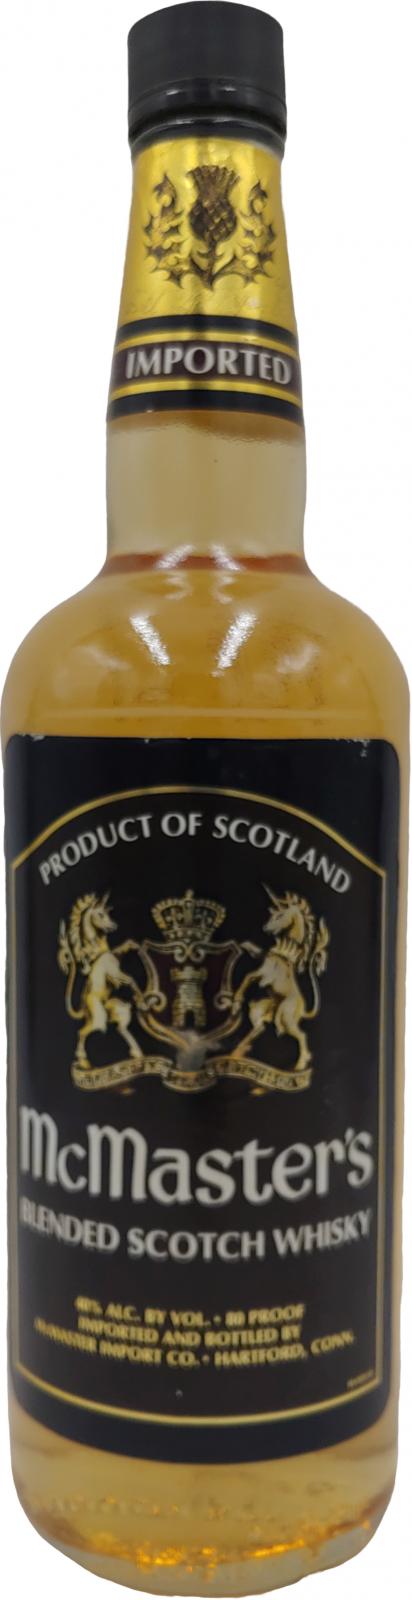 McMaster's Blended Scotch Whisky Blended Scotch Whisky 40% 750ml